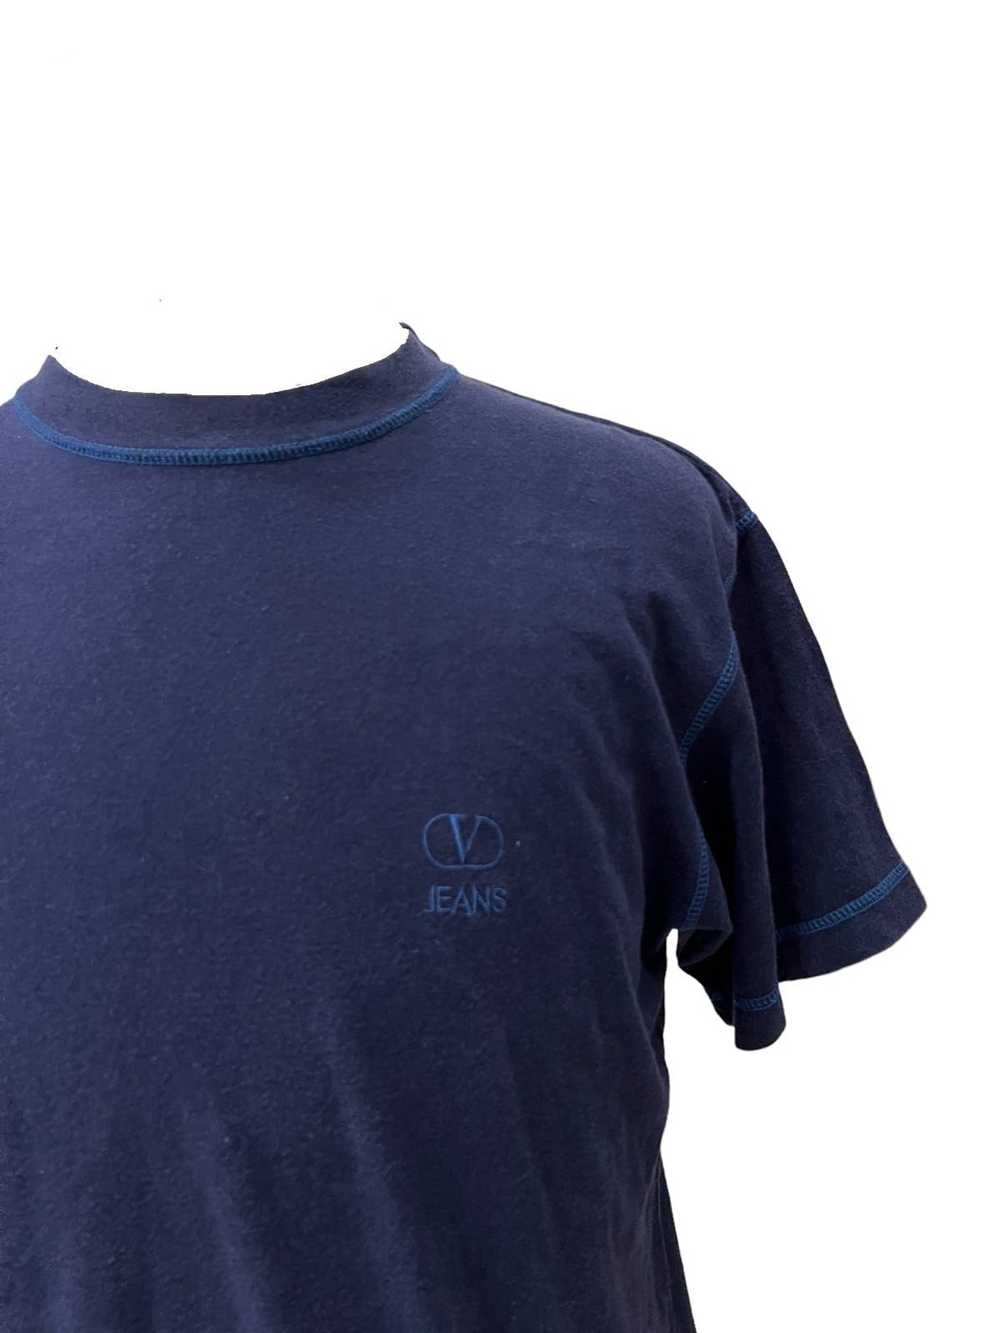 Valentino Valentino Garavani Embroidered T-Shirt - image 2